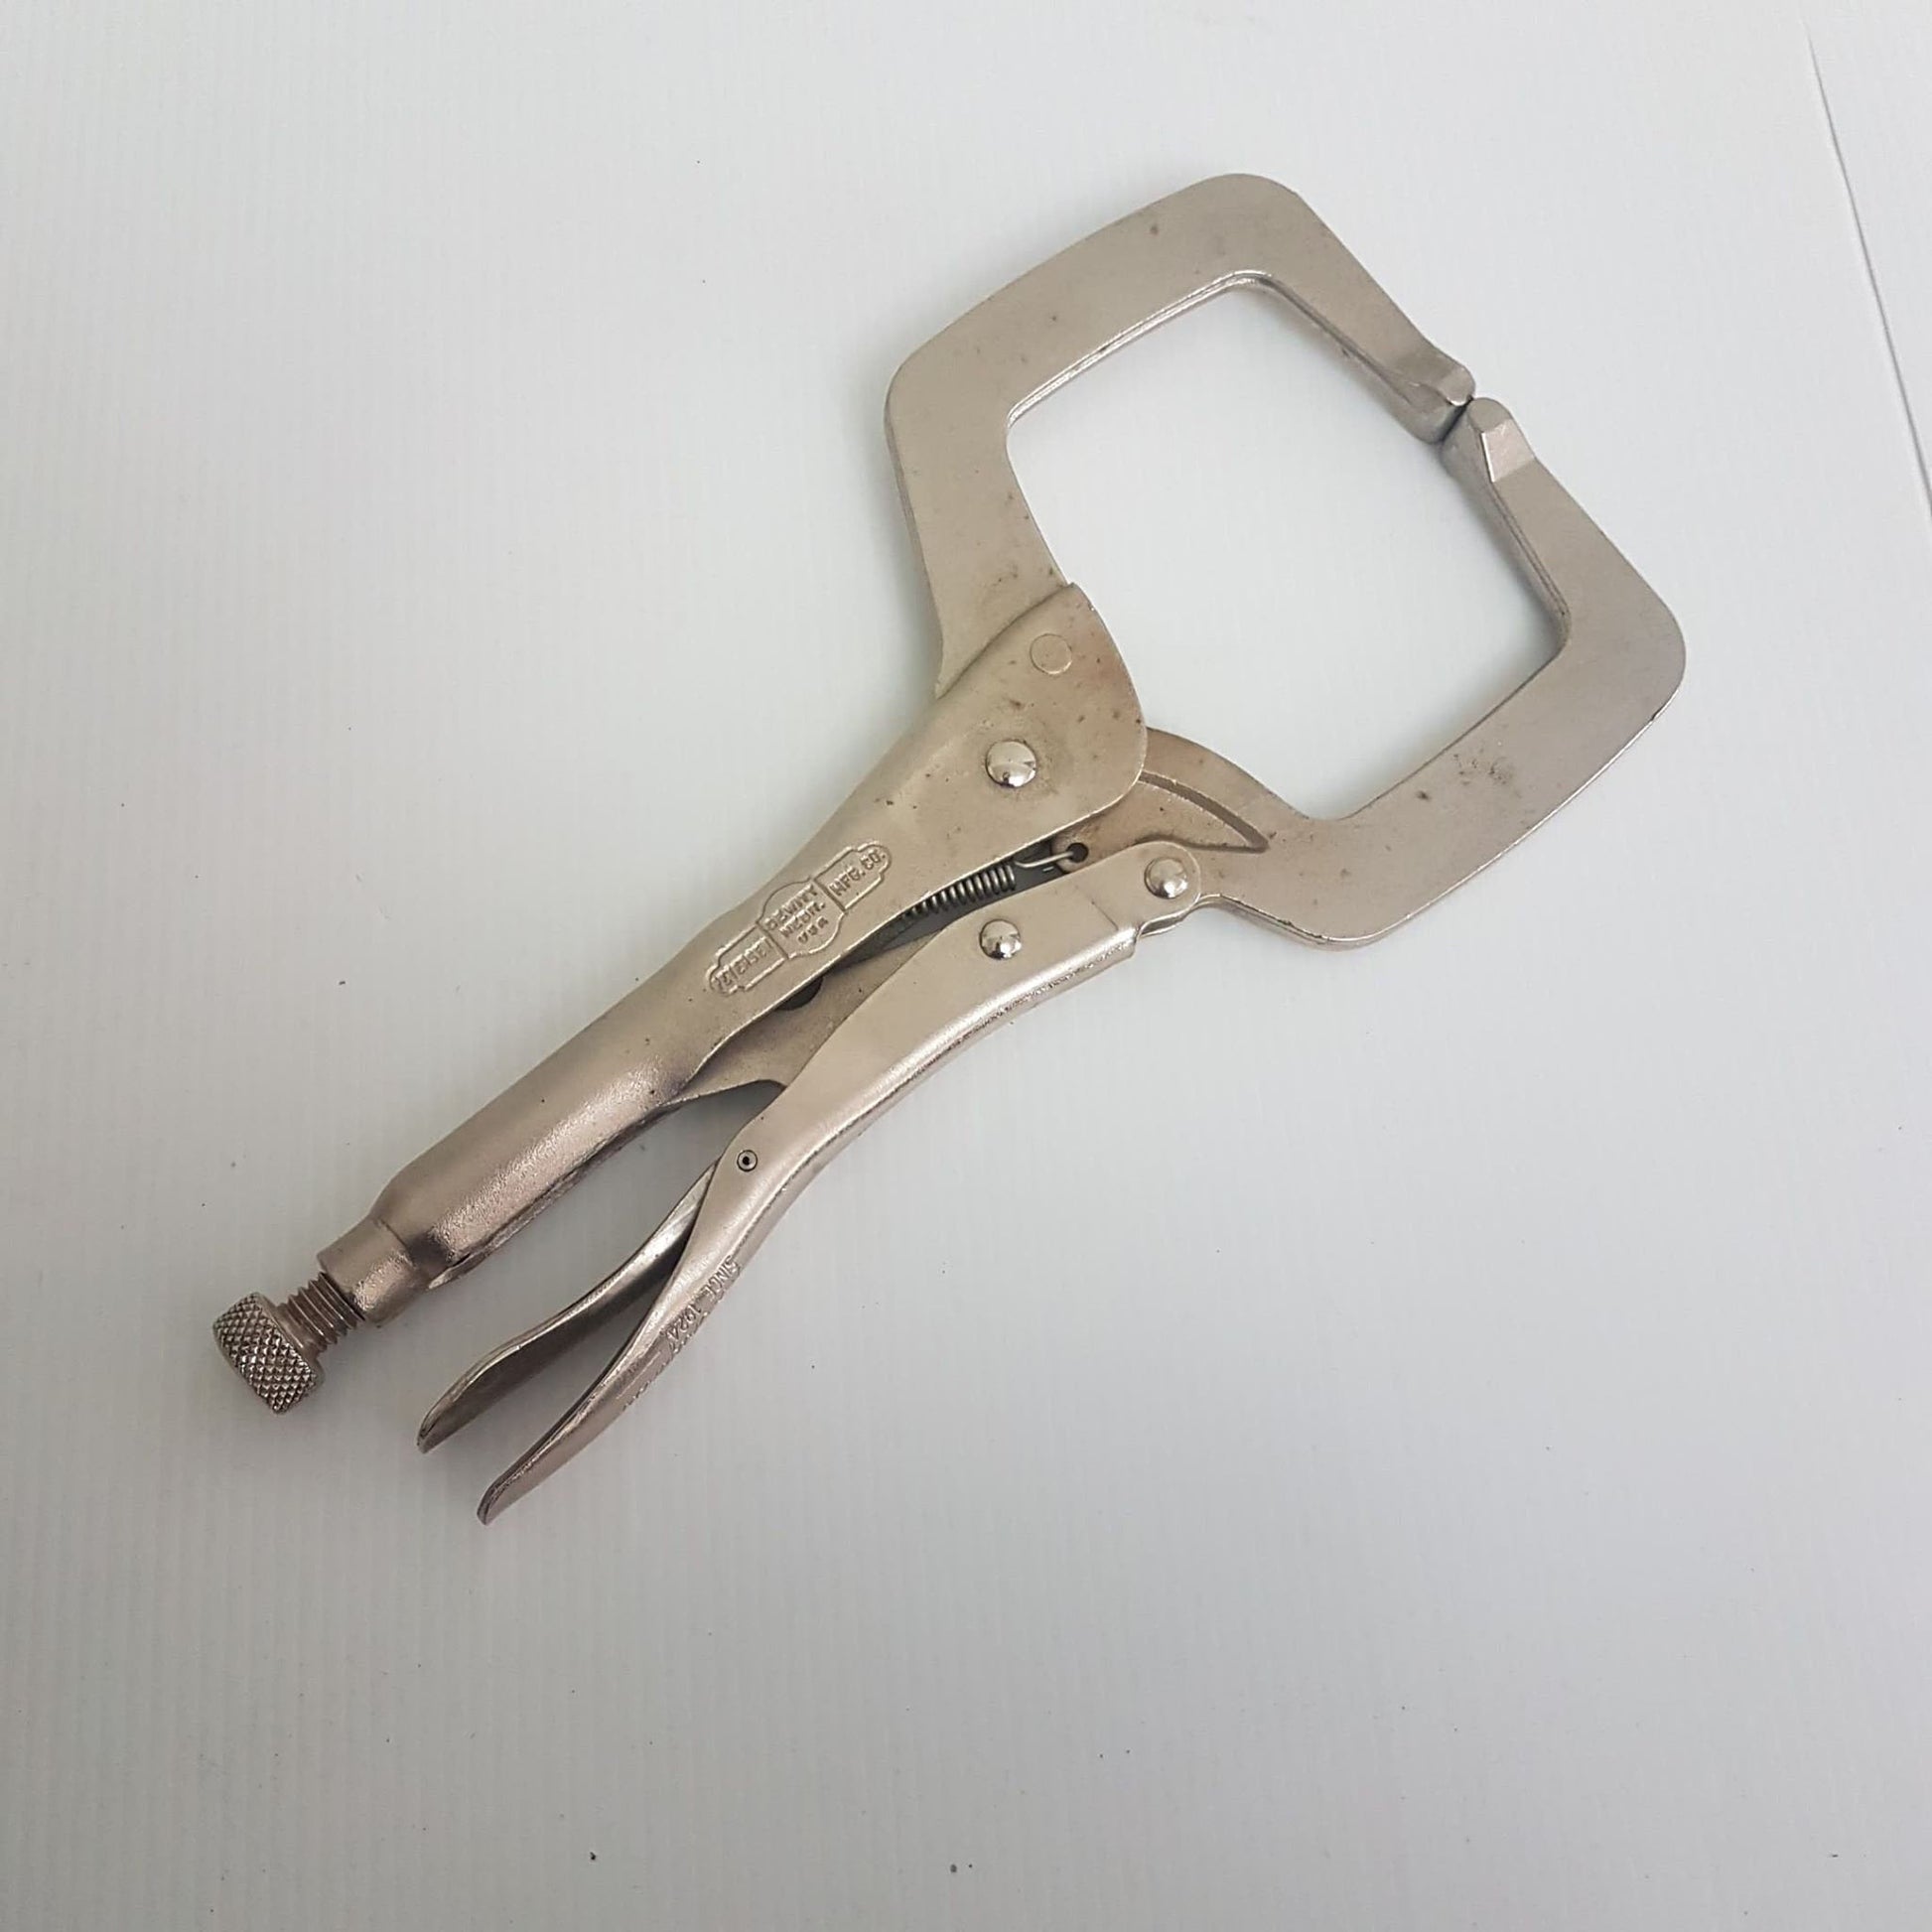 vise grip industrial tools 11r locking c-clamp like new